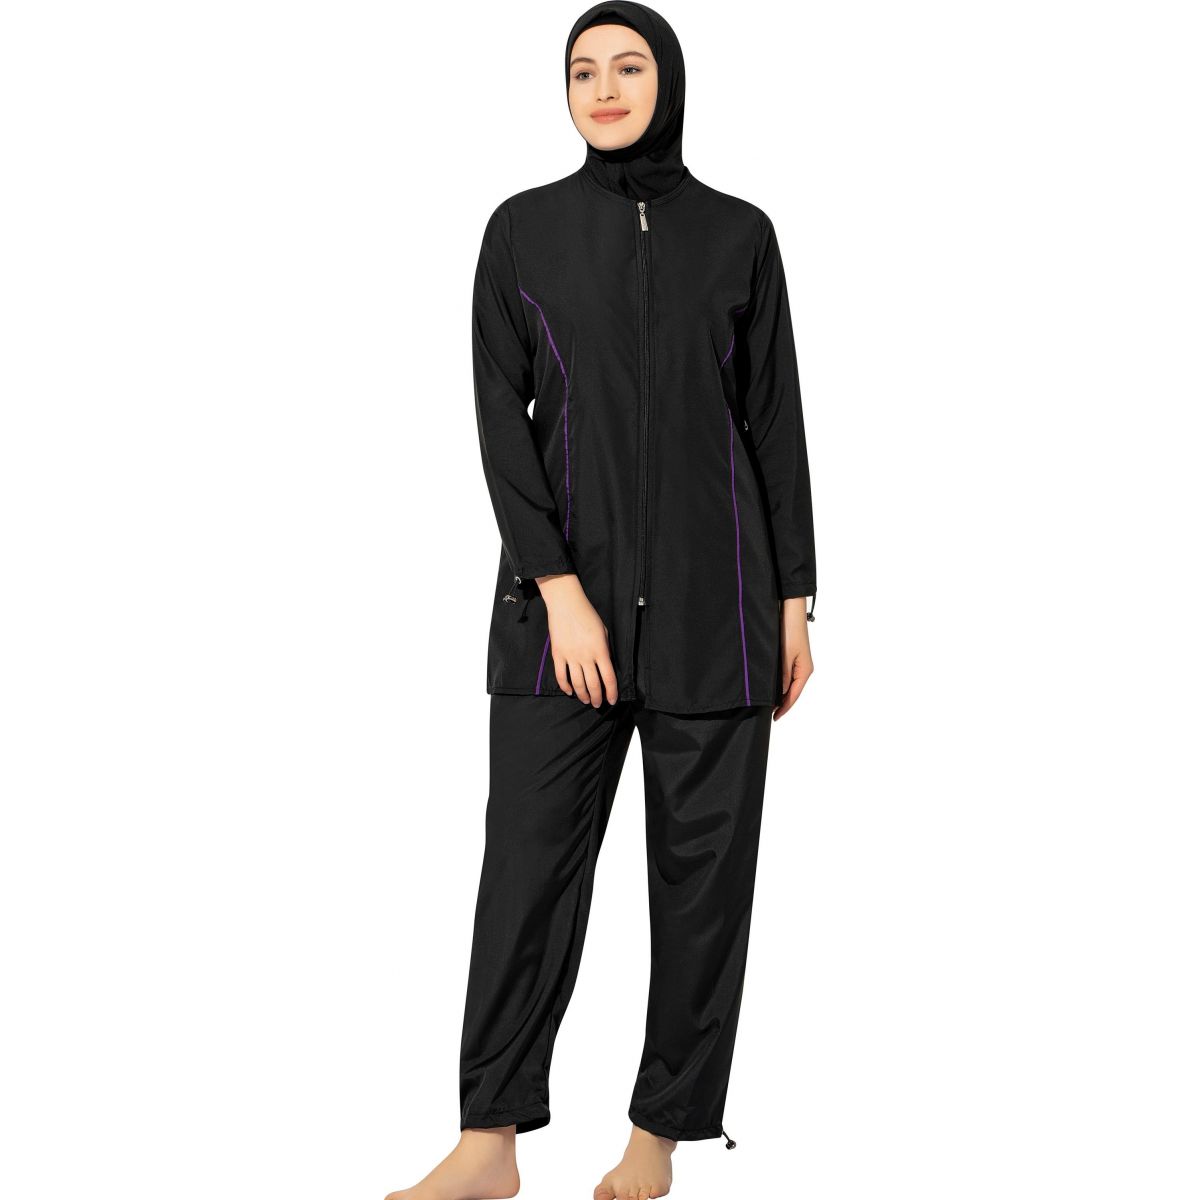 Argisa 7102 Long Sleeve Solid Plain Full Hijab Swimwear S-5XL Plus Size Muslim Hijab Islamic Swimsuit Burkini Turkey Full Cover swim